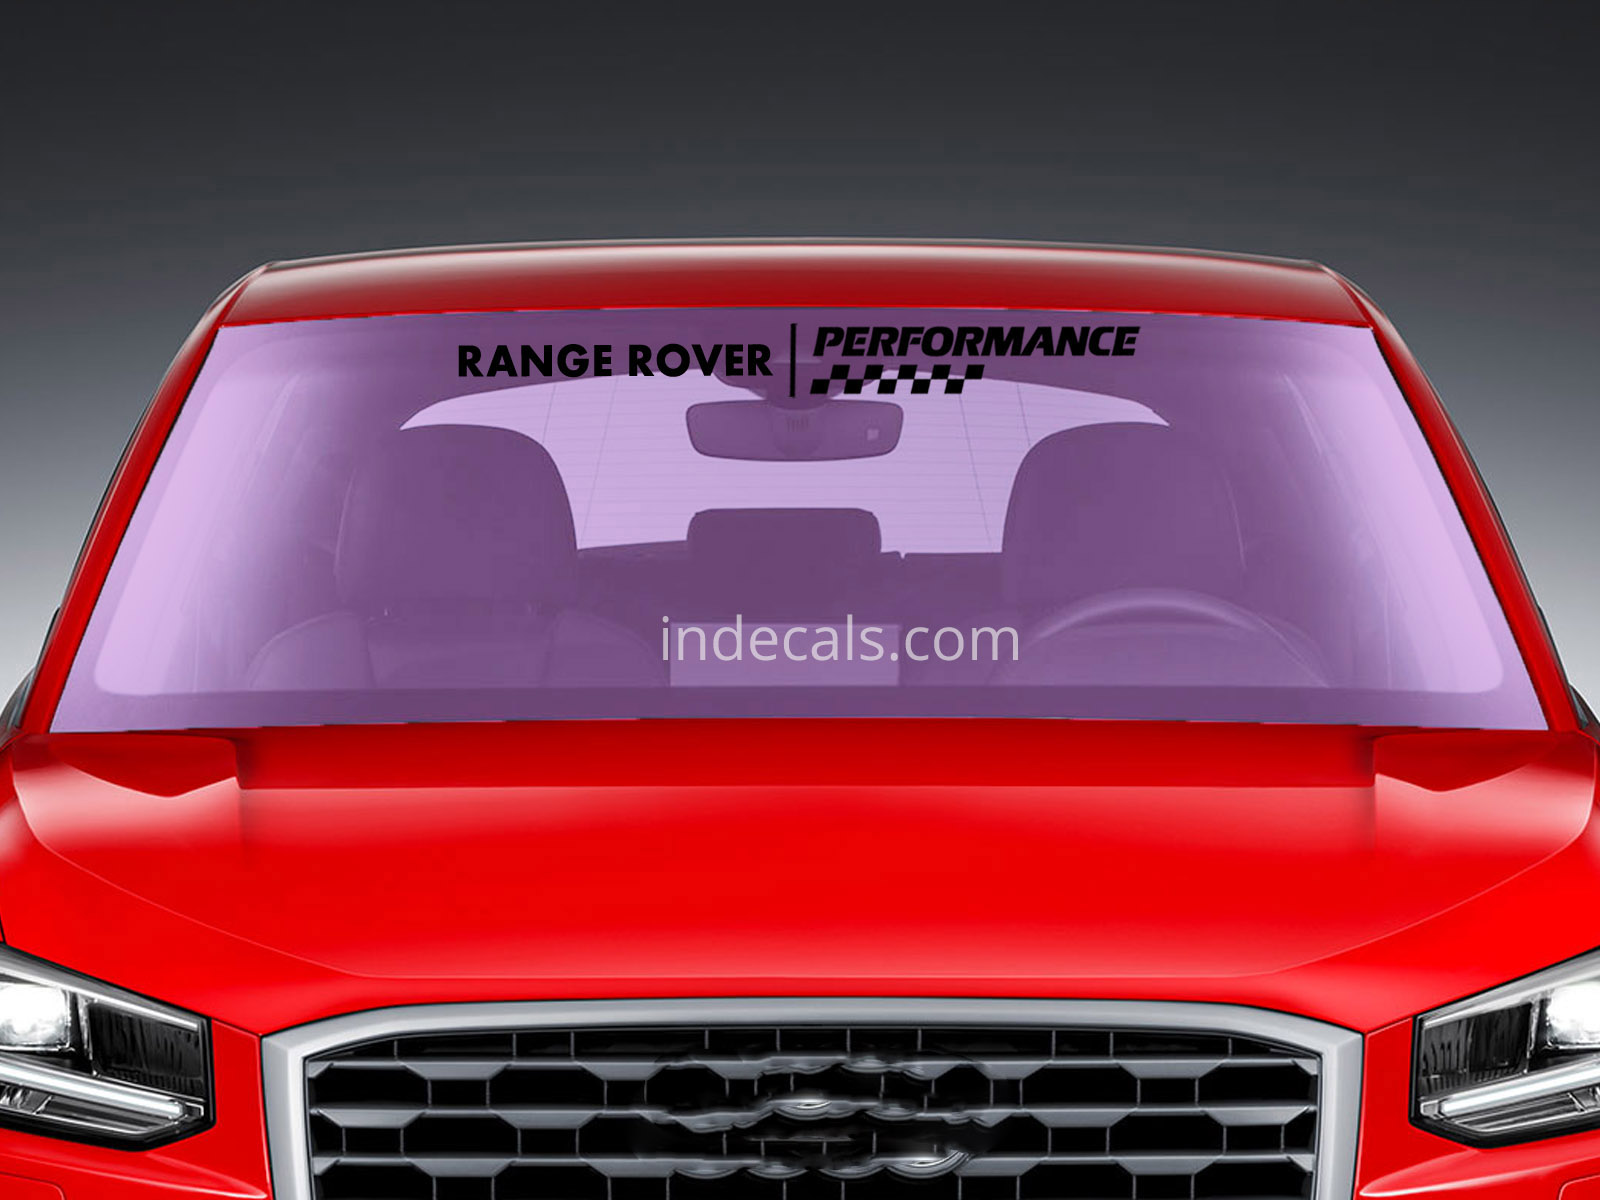 1 x Range Rover Performance Sticker for Windshield or Back Window - Black